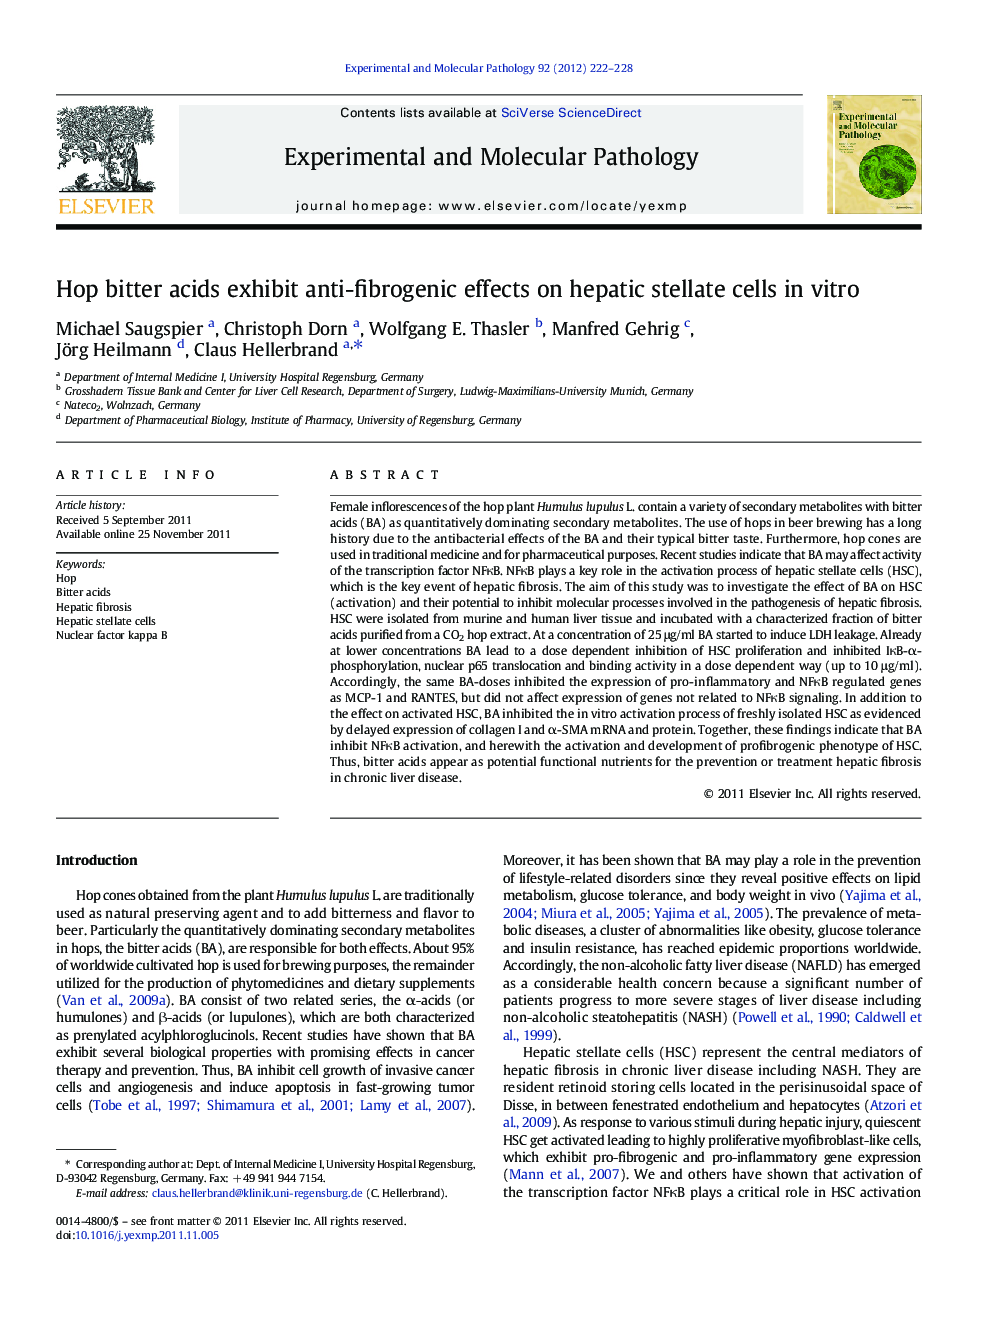 Hop bitter acids exhibit anti-fibrogenic effects on hepatic stellate cells in vitro